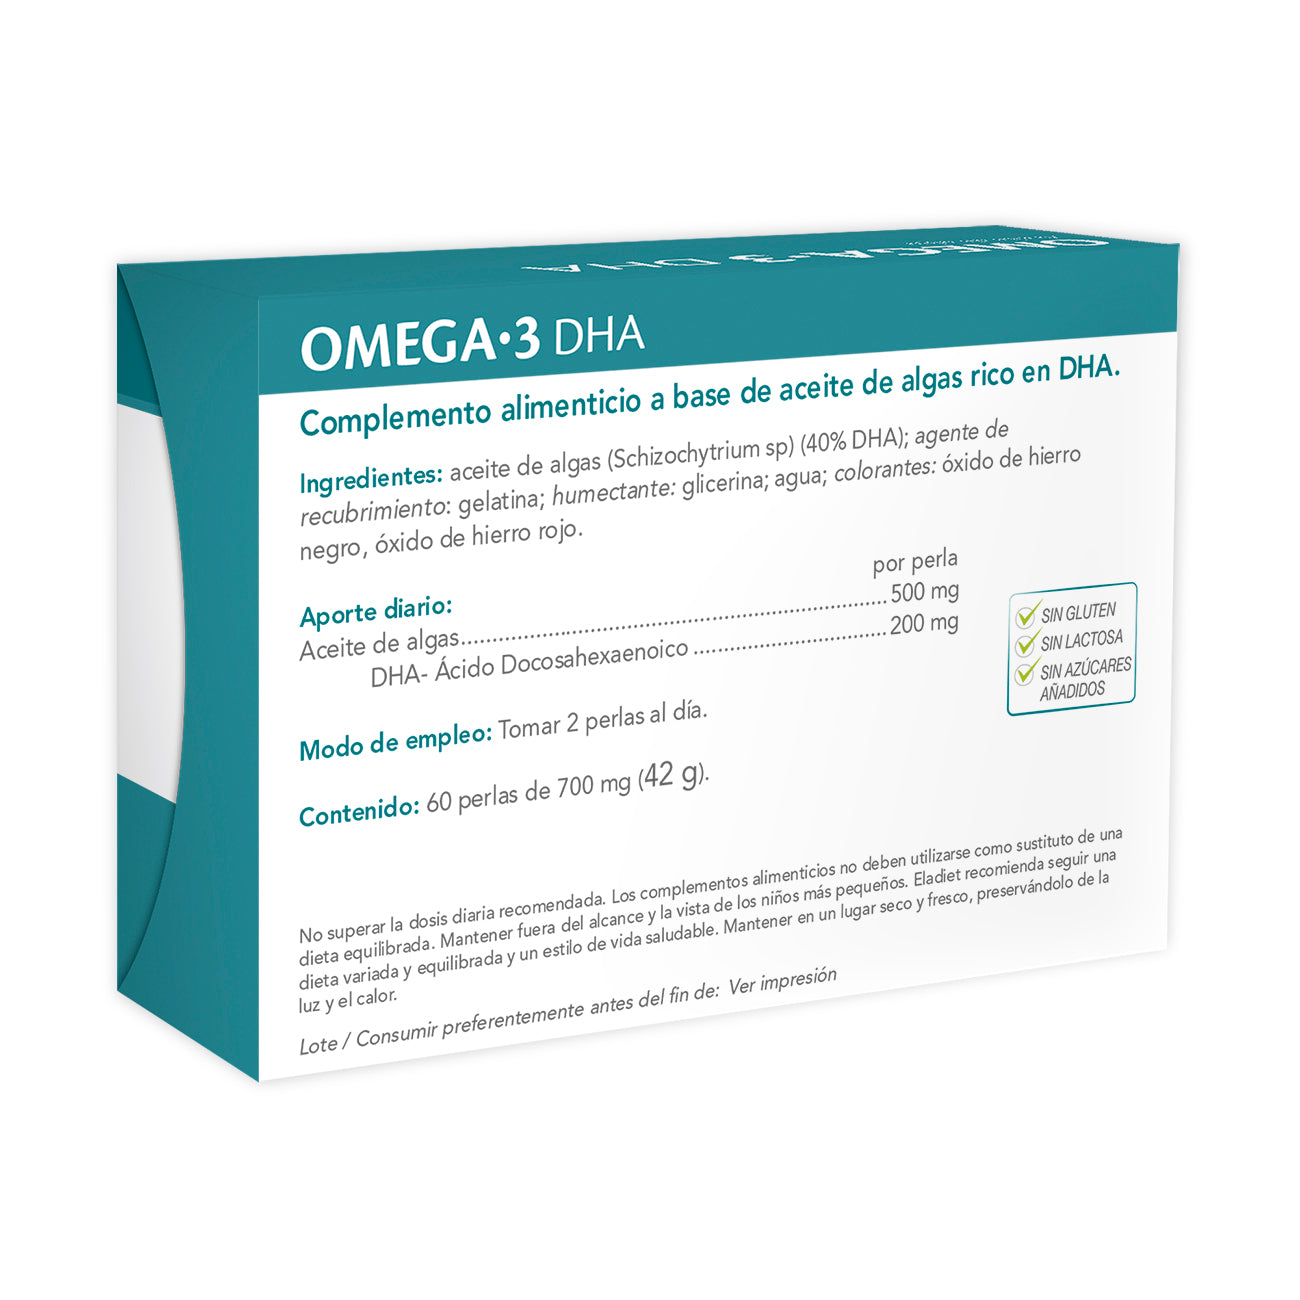 Eladiet - Omega 3 Eladiet 60 Perlas - Biopharmacia, Parafarmacia online